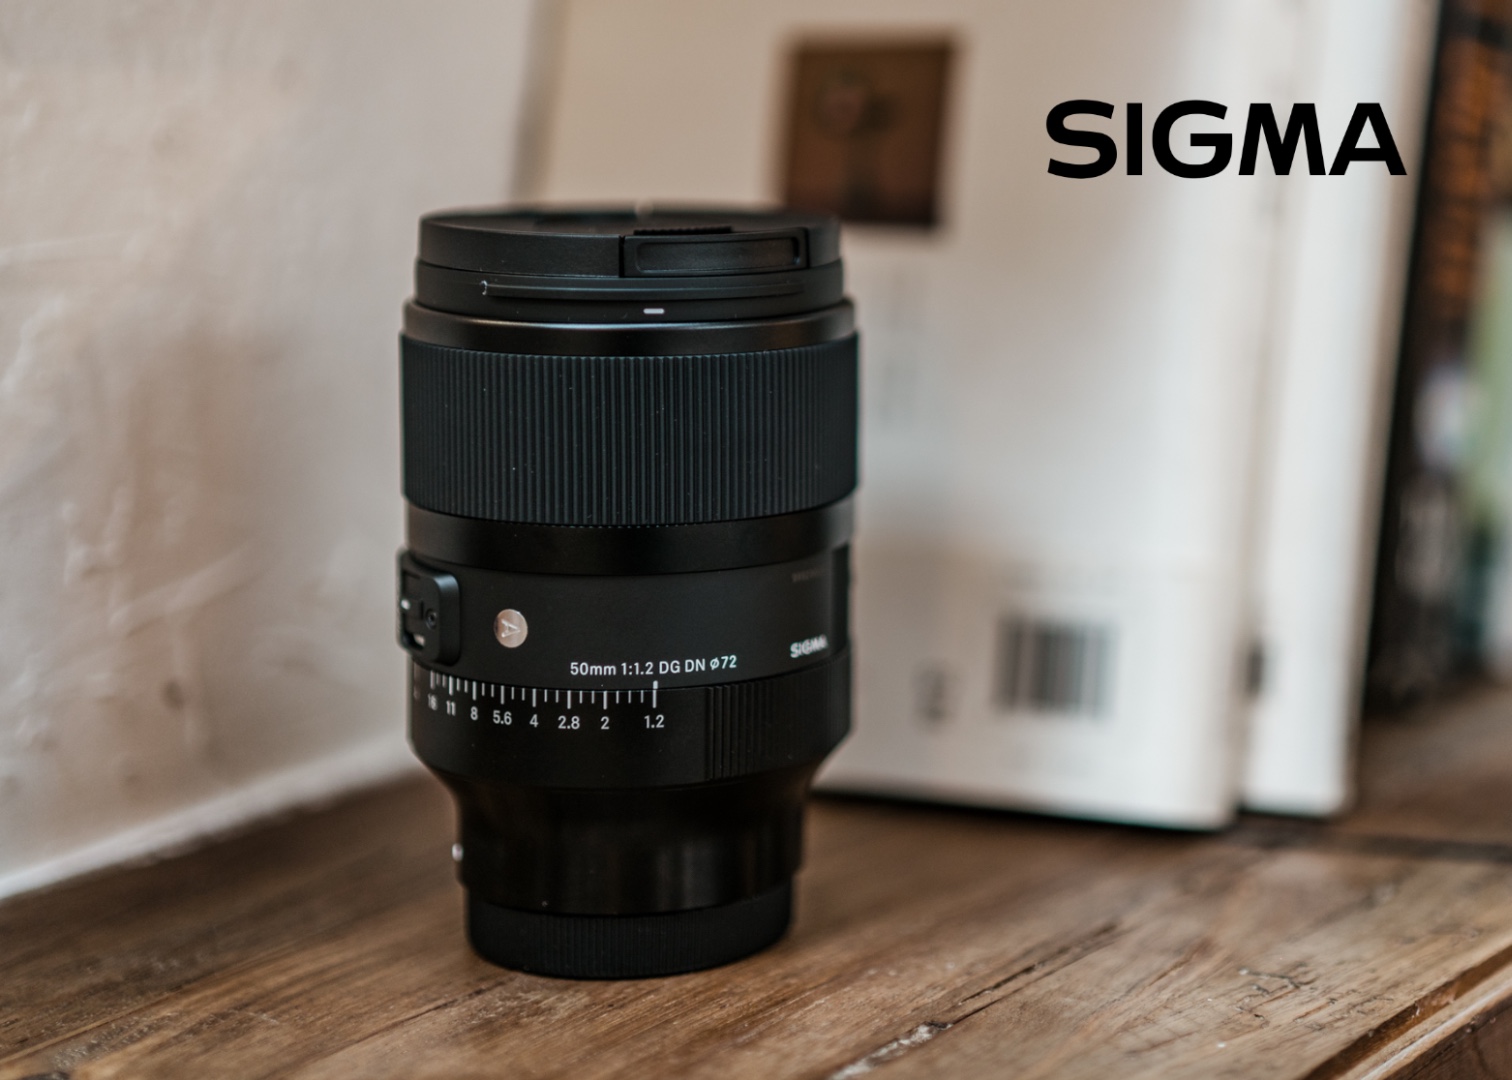 The new Sigma ART 50mm f1.2